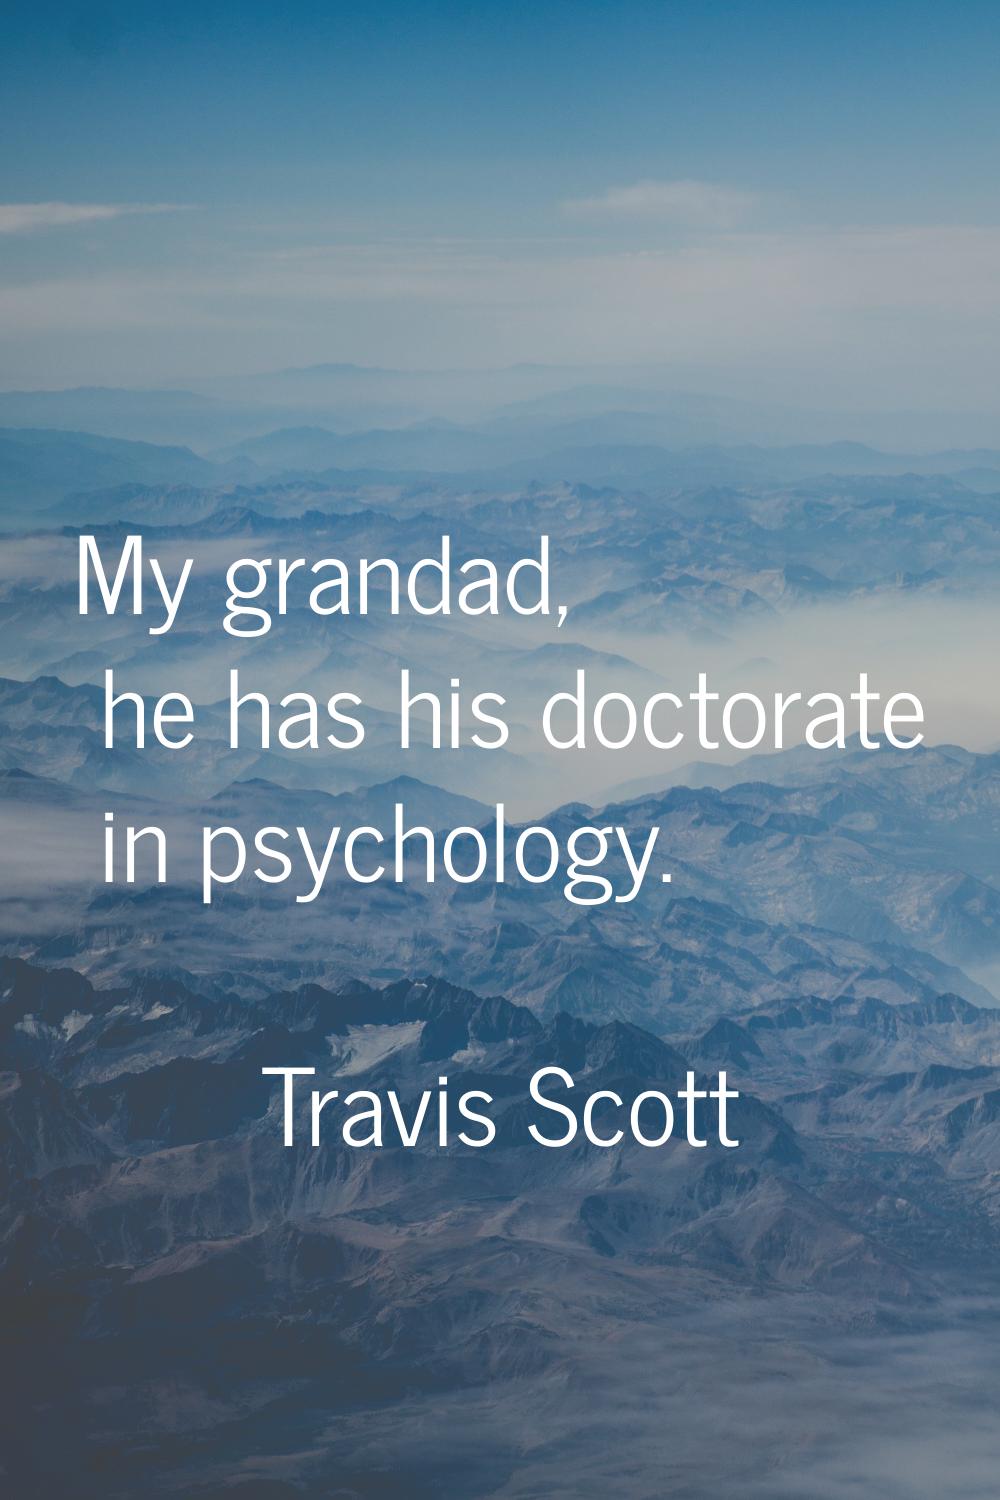 My grandad, he has his doctorate in psychology.